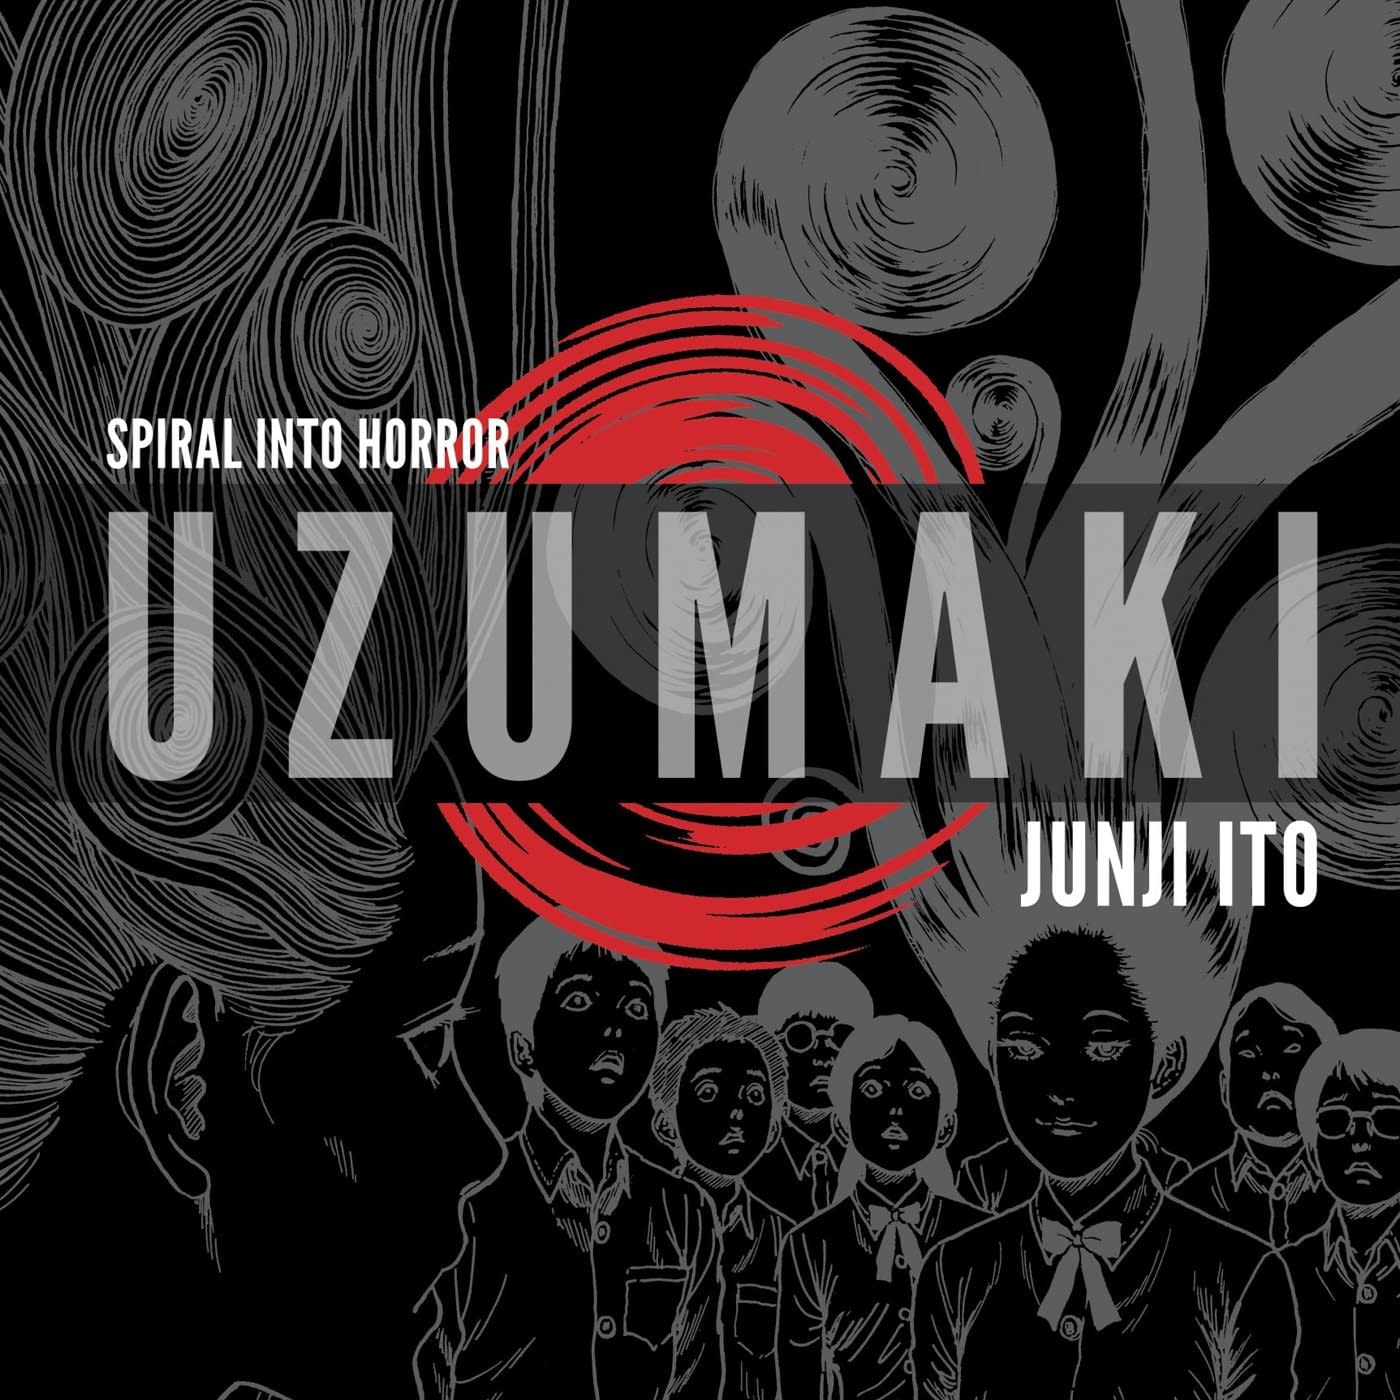 Junji Ito's Uzumaki Anime Spirals Into Its Third Delay